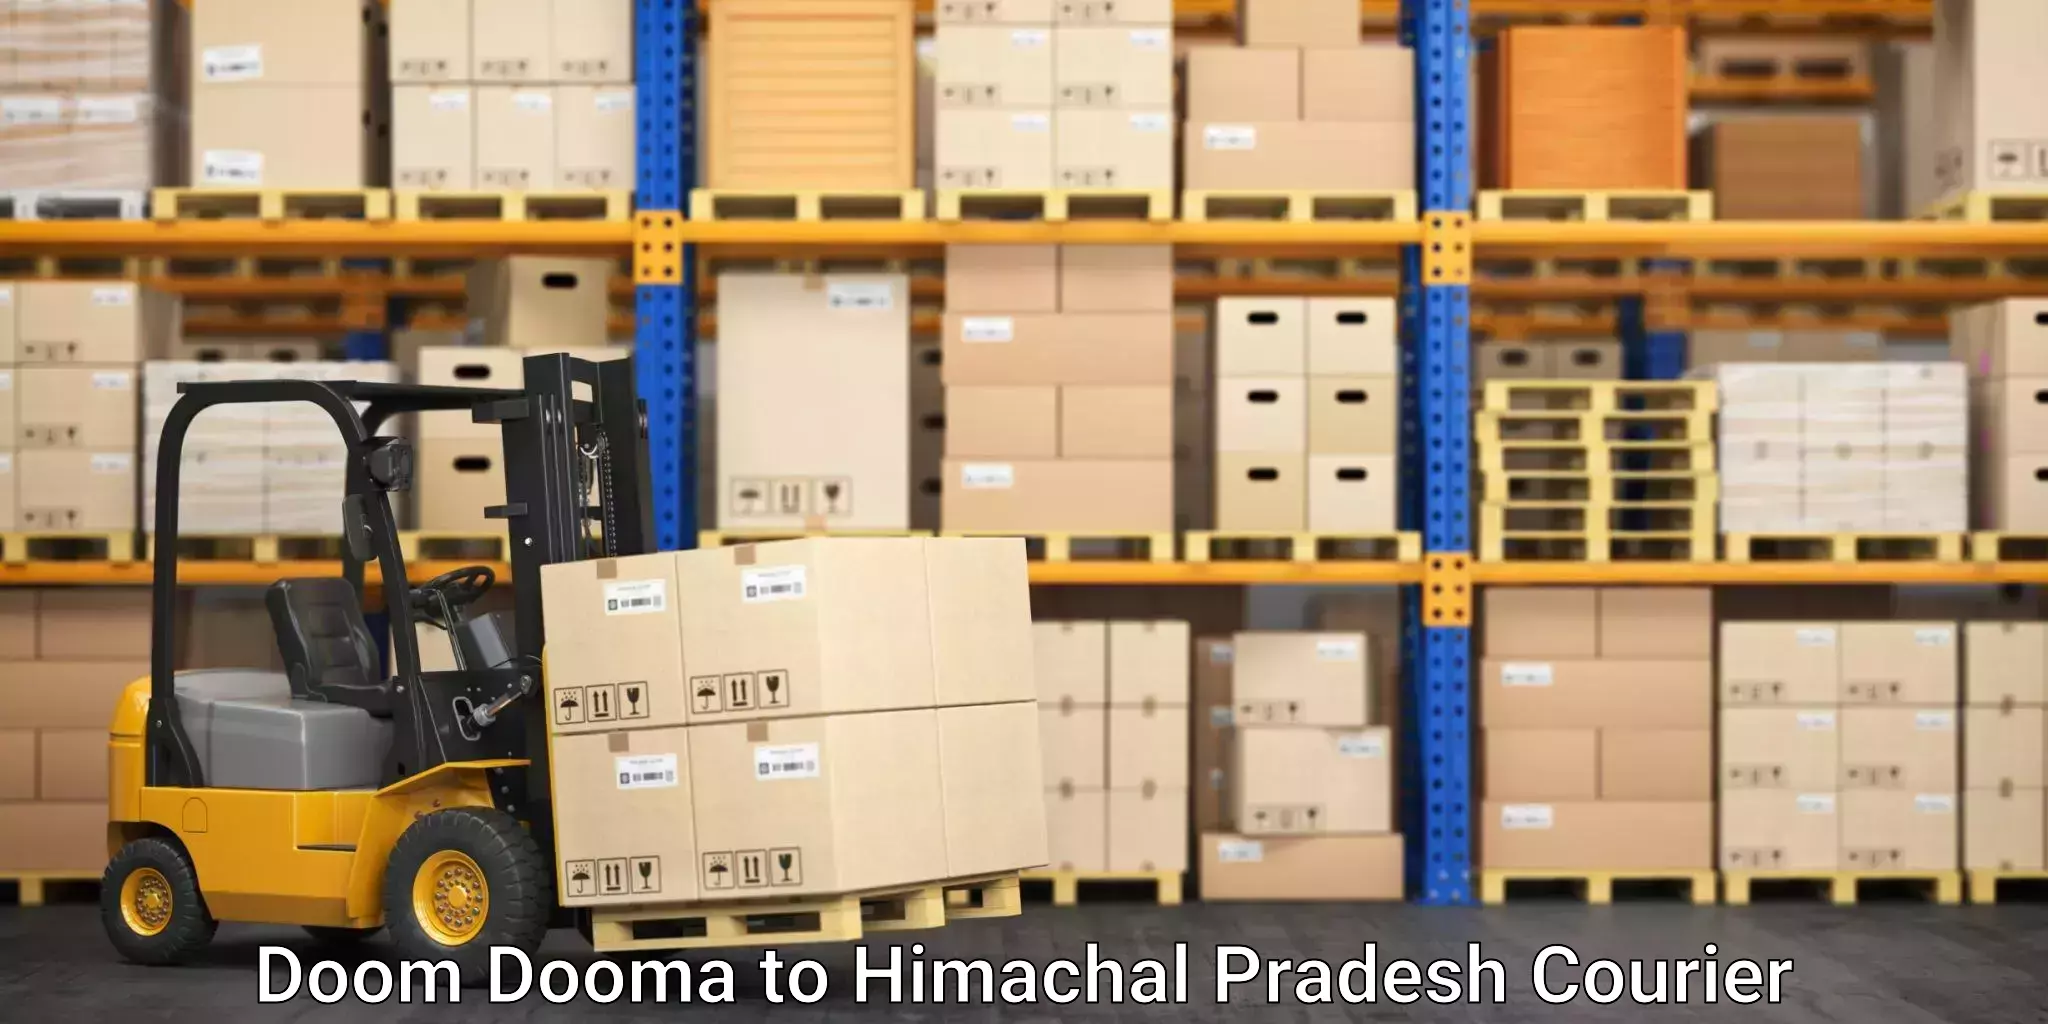 Express package services Doom Dooma to Una Himachal Pradesh